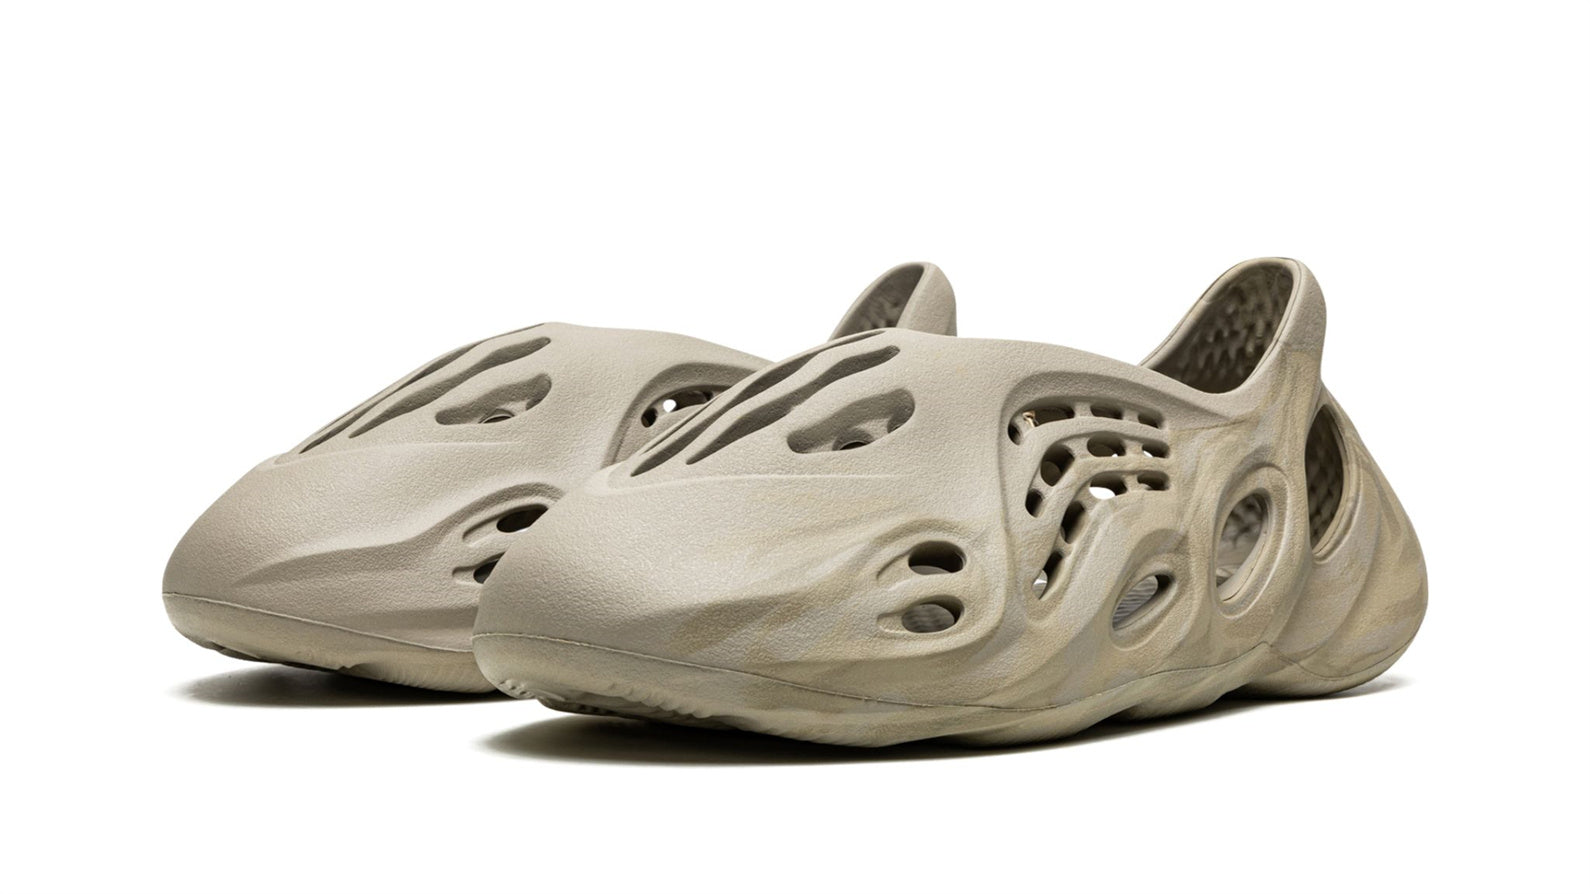 Adidas Yeezy Foam Runner Sneakers